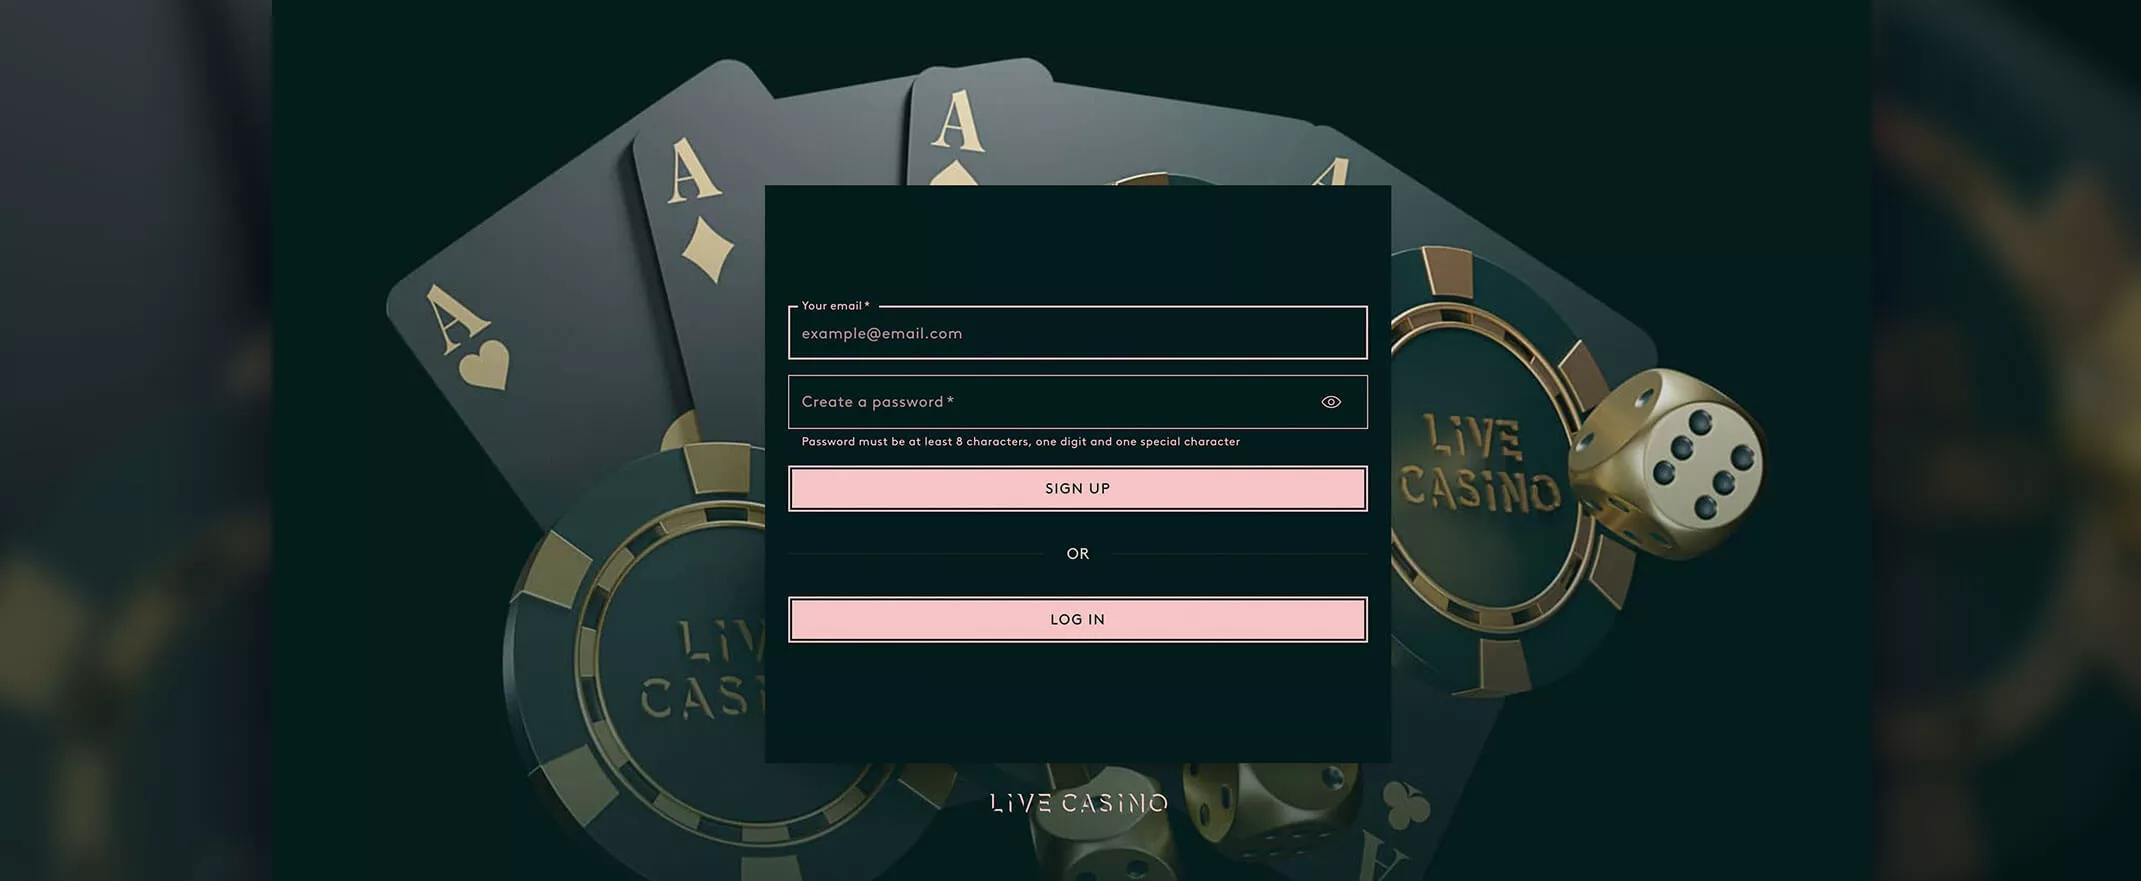 LiveCasino screenshot of the registration